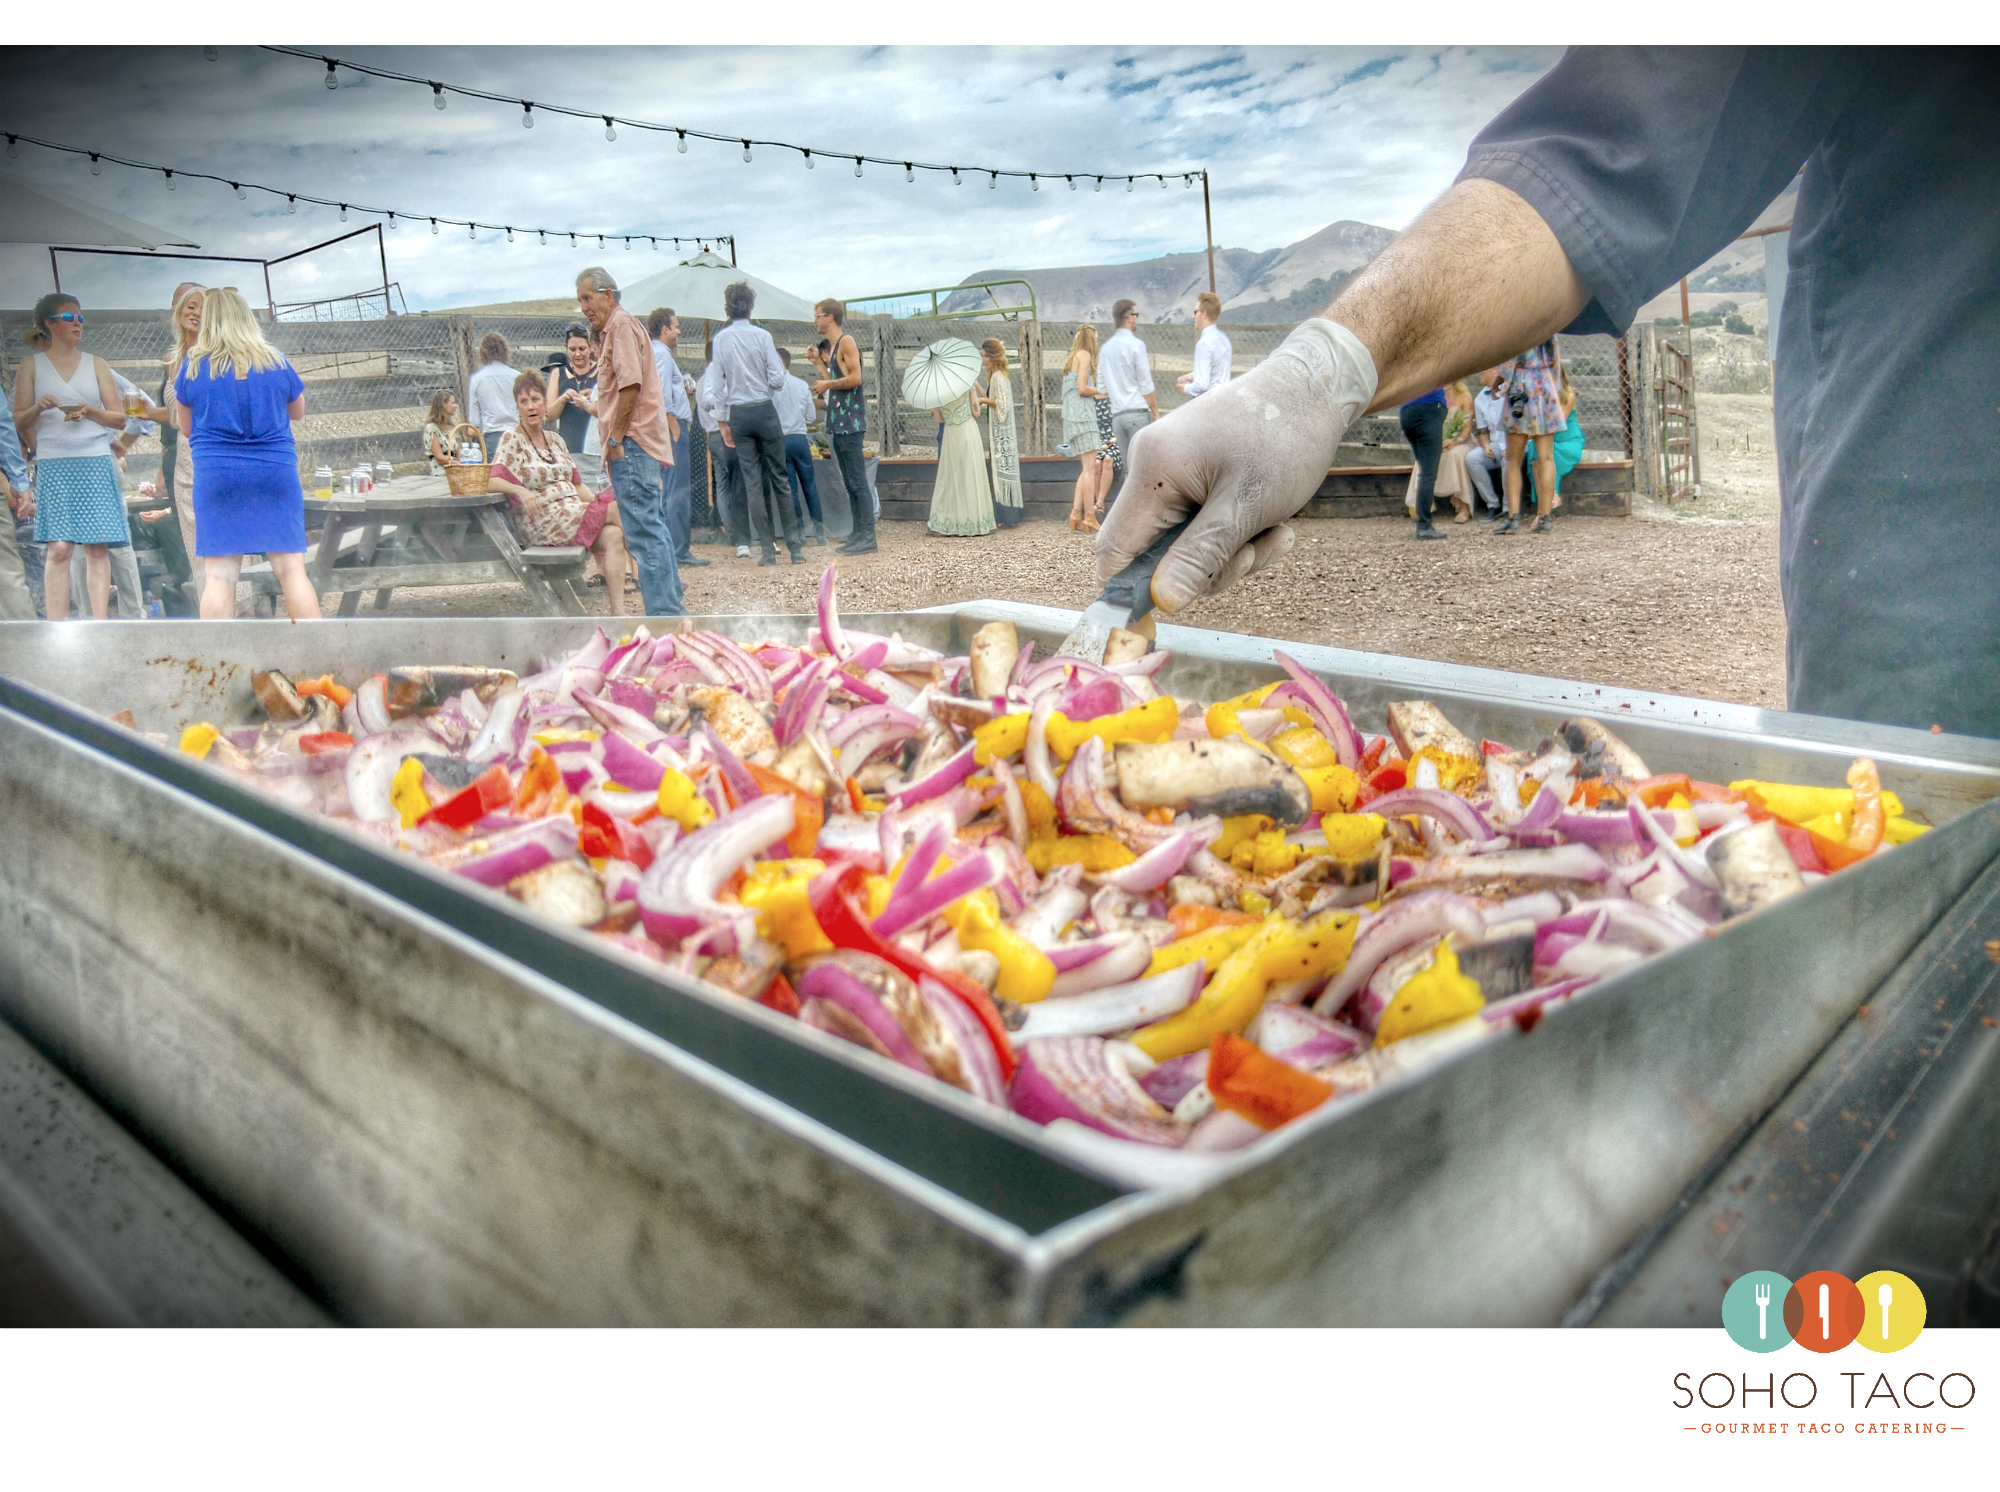 SOHO TACO Gourmet Taco Catering - Wedding - San Luis Obispo - Spreafico Farms Barn - Grilling Veggies